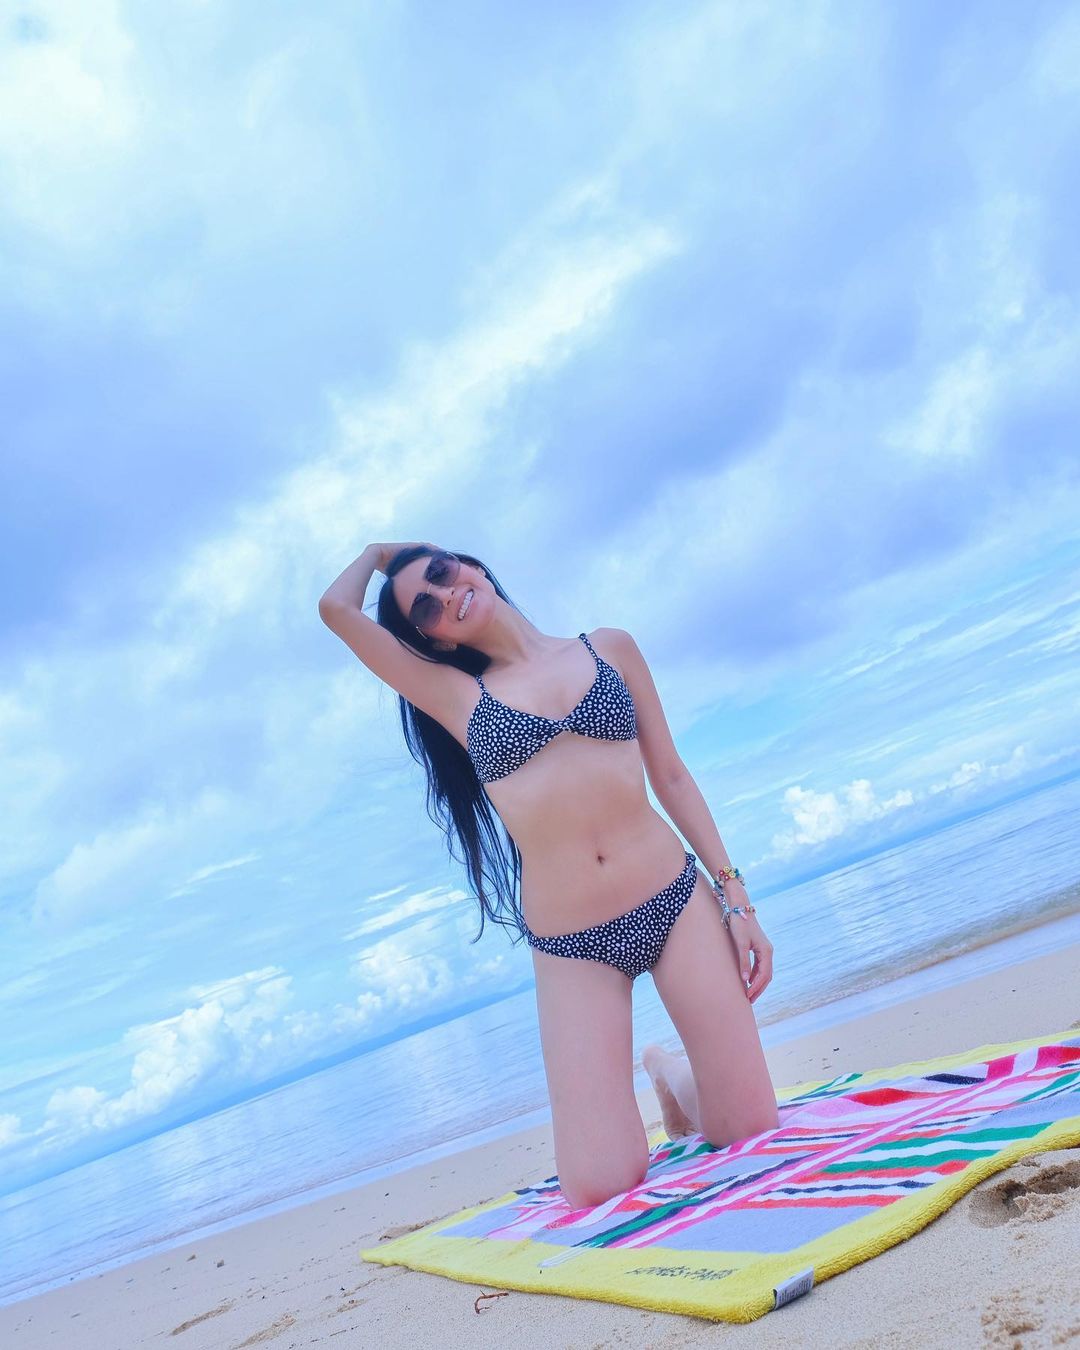 Heart Evangelista sets Instagram on fire with bikini photo